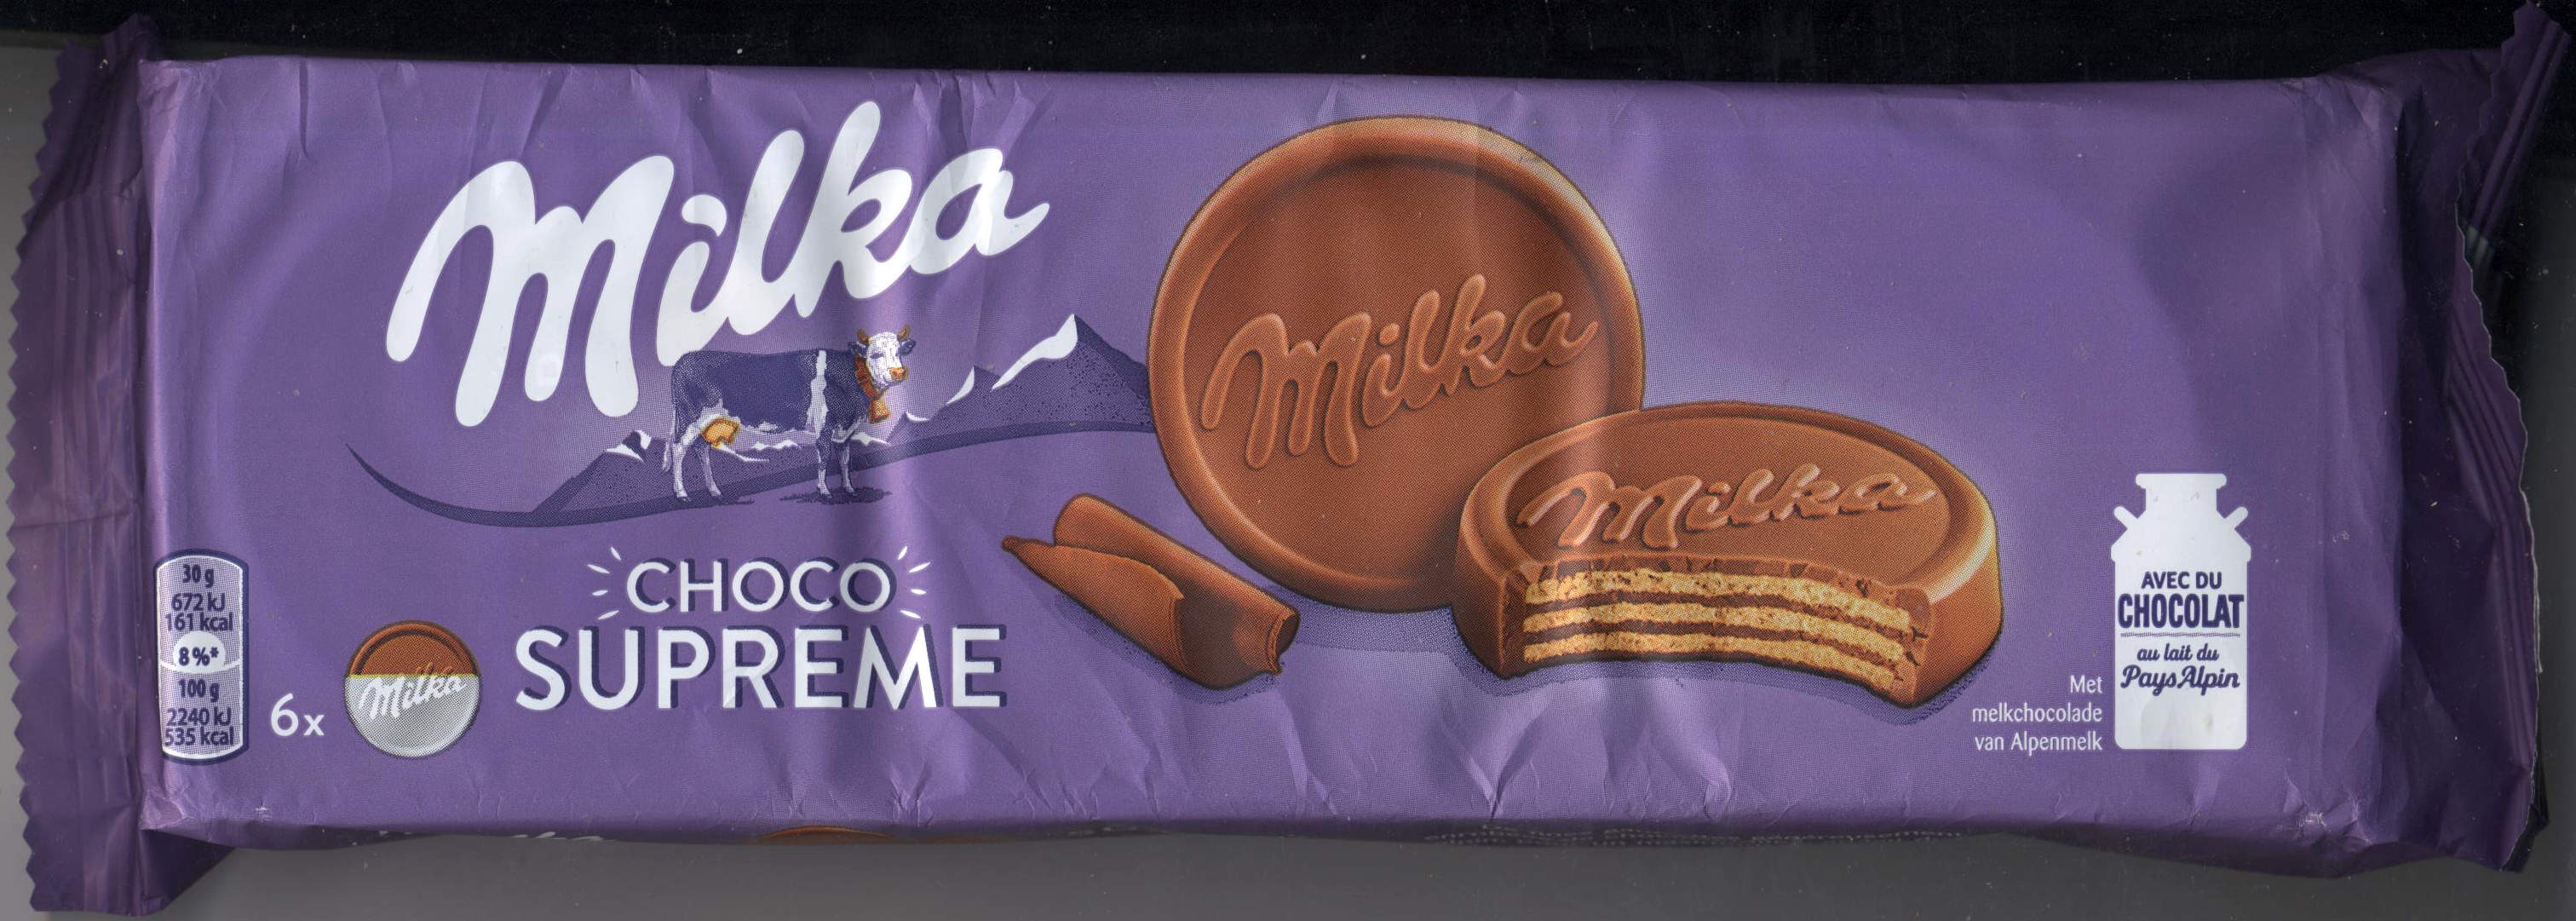 Milka - Choco Supreme - Produit